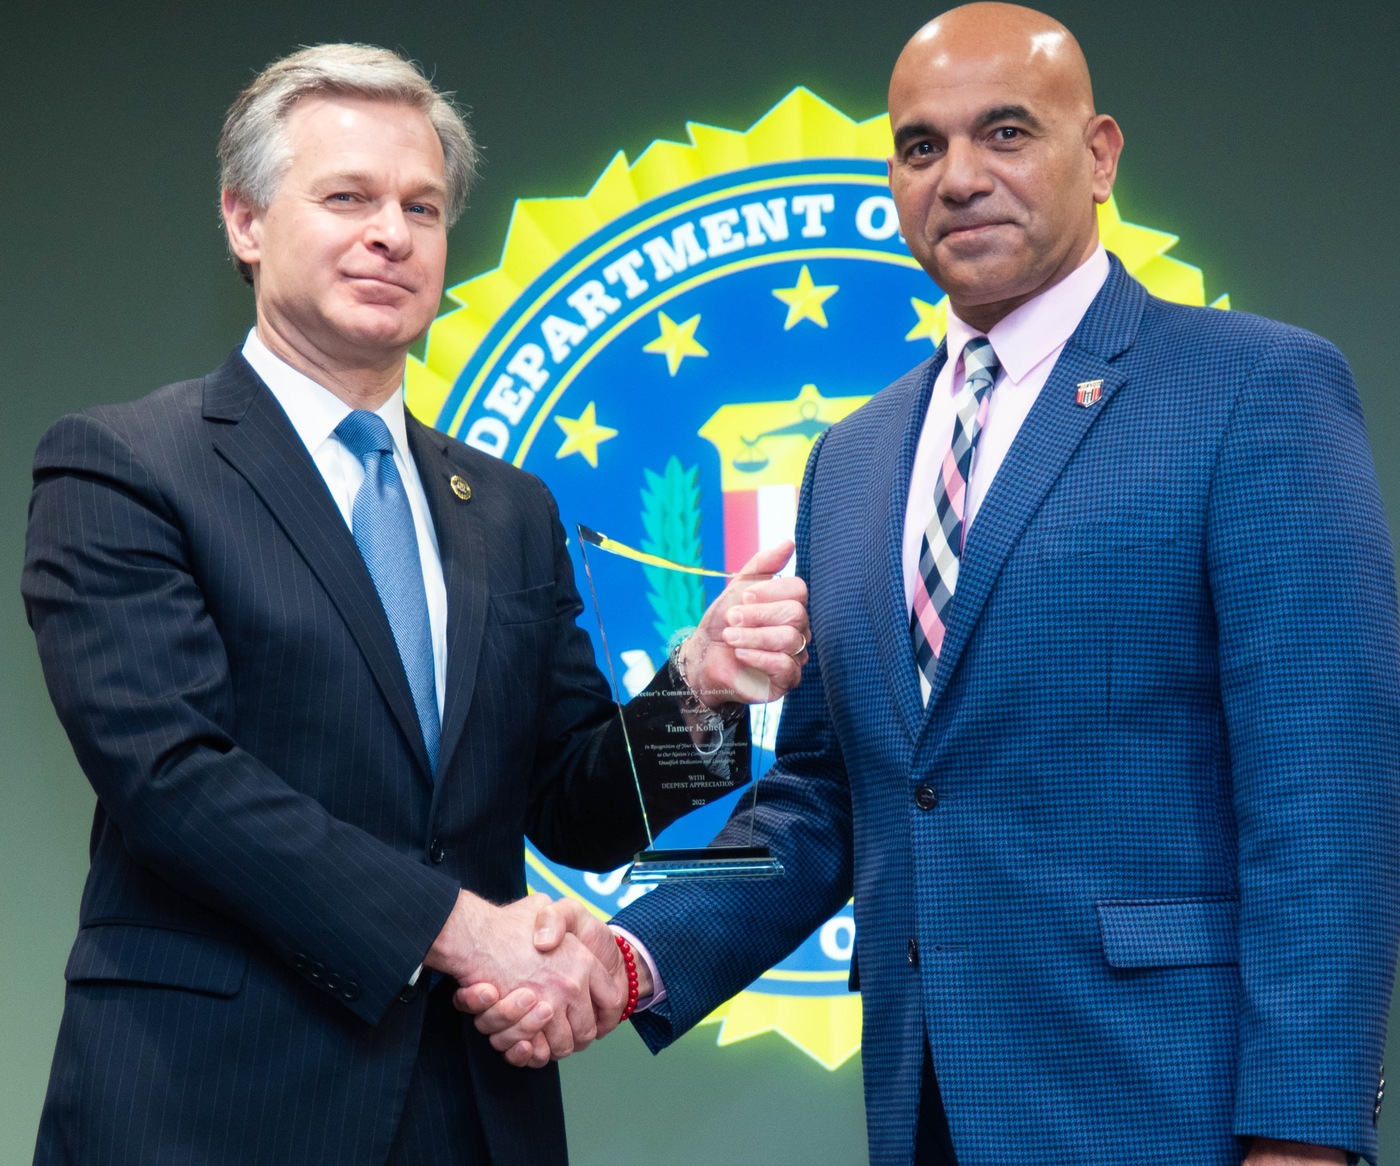 FBI Boston 2022 Director’s Community Leadership Award recipient Tamer Koheil.